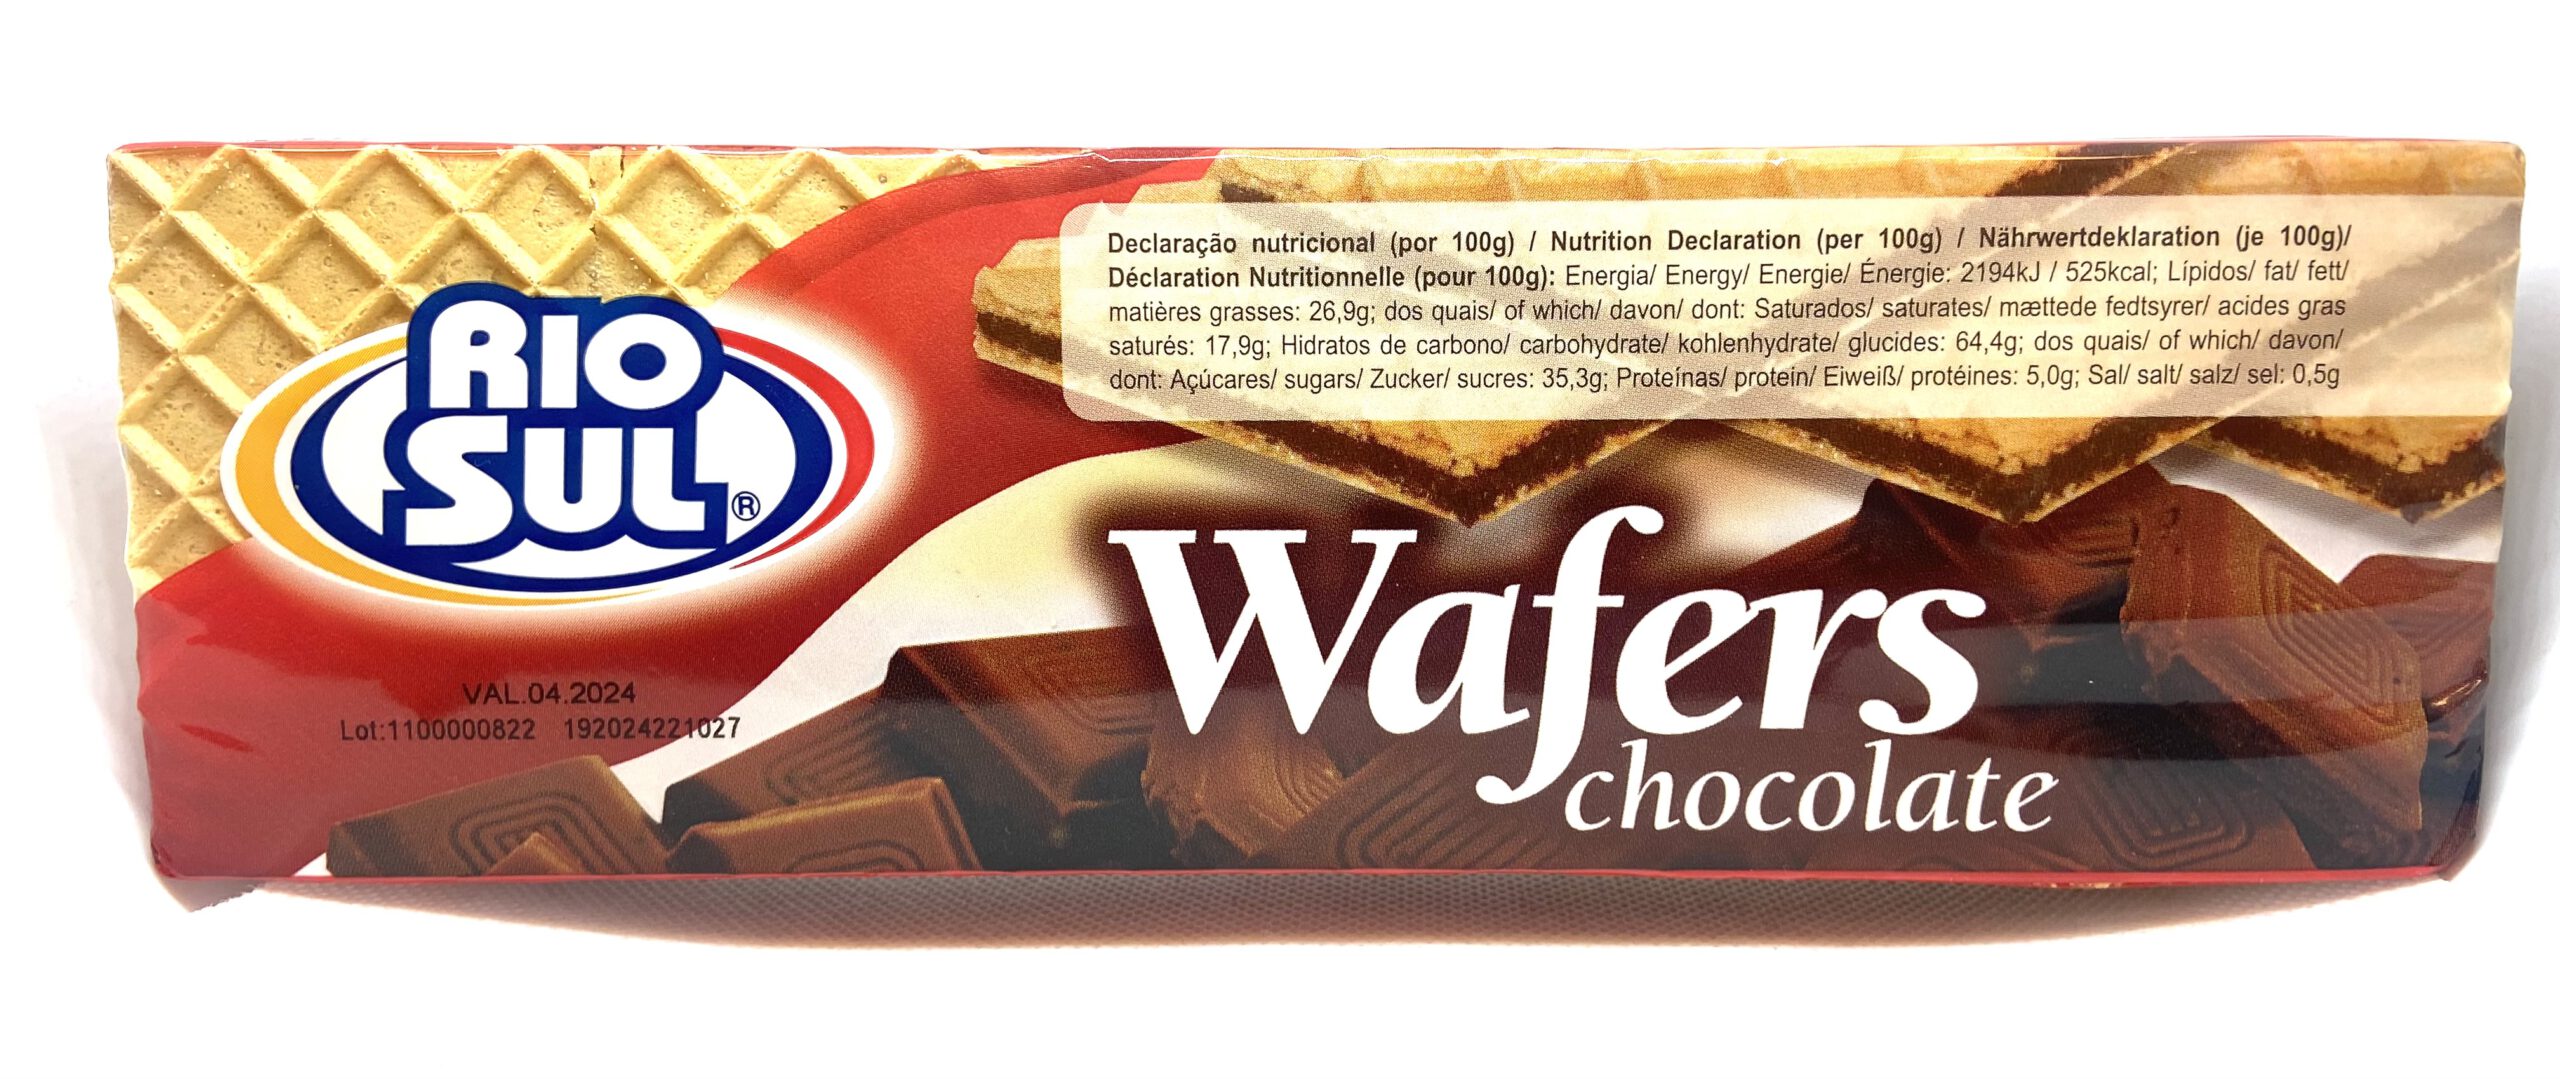 Wafers Chocolate 210g